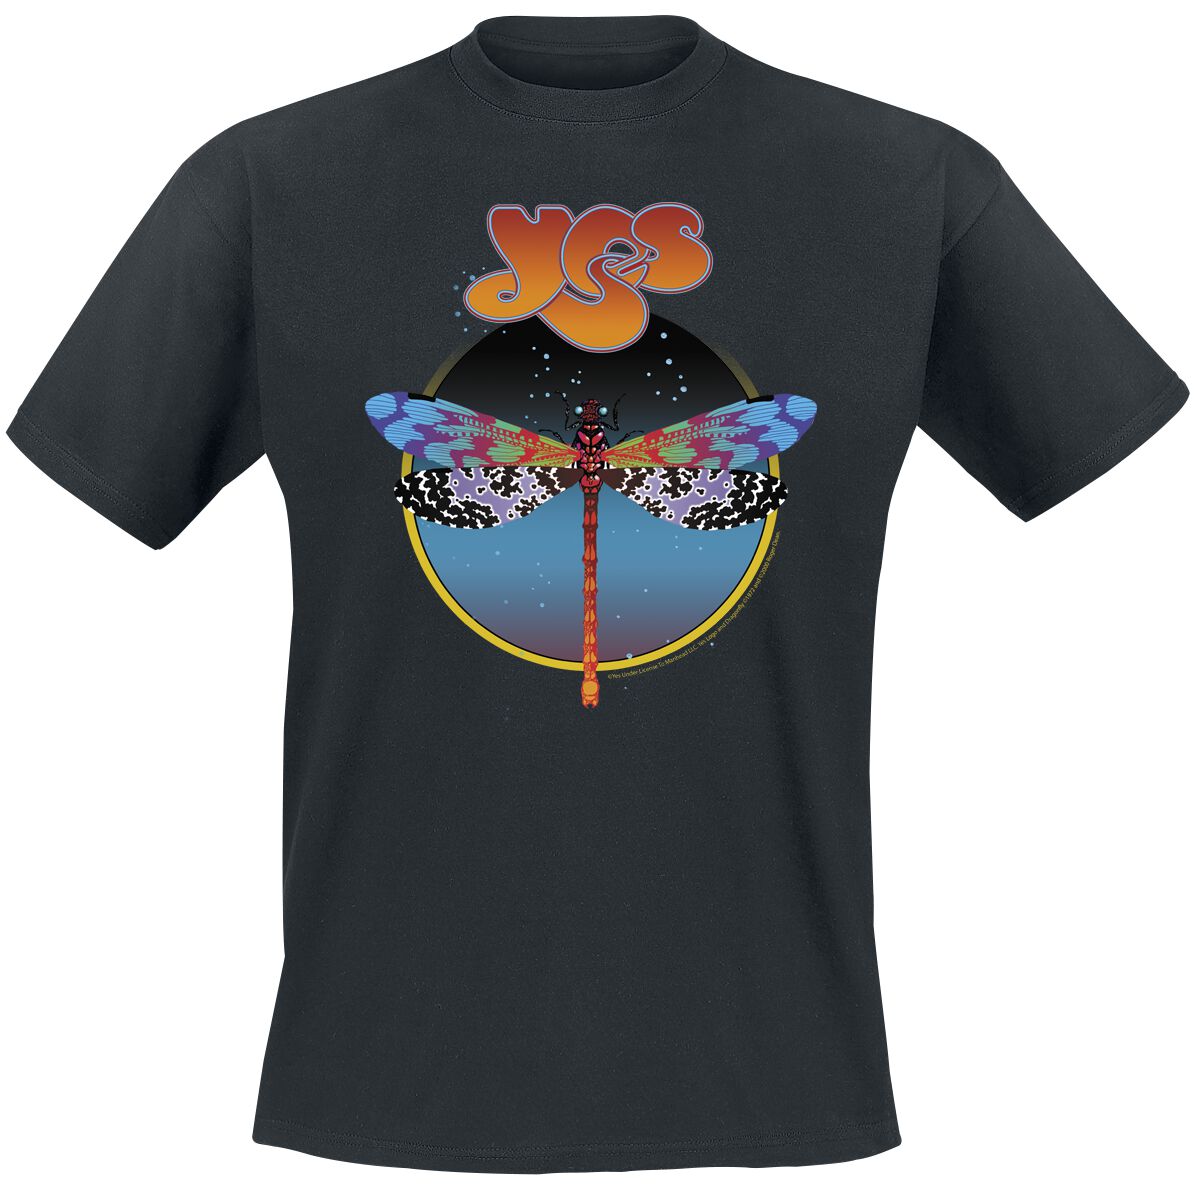 Image of Yes Dragonfly Tour V2 T-Shirt schwarz